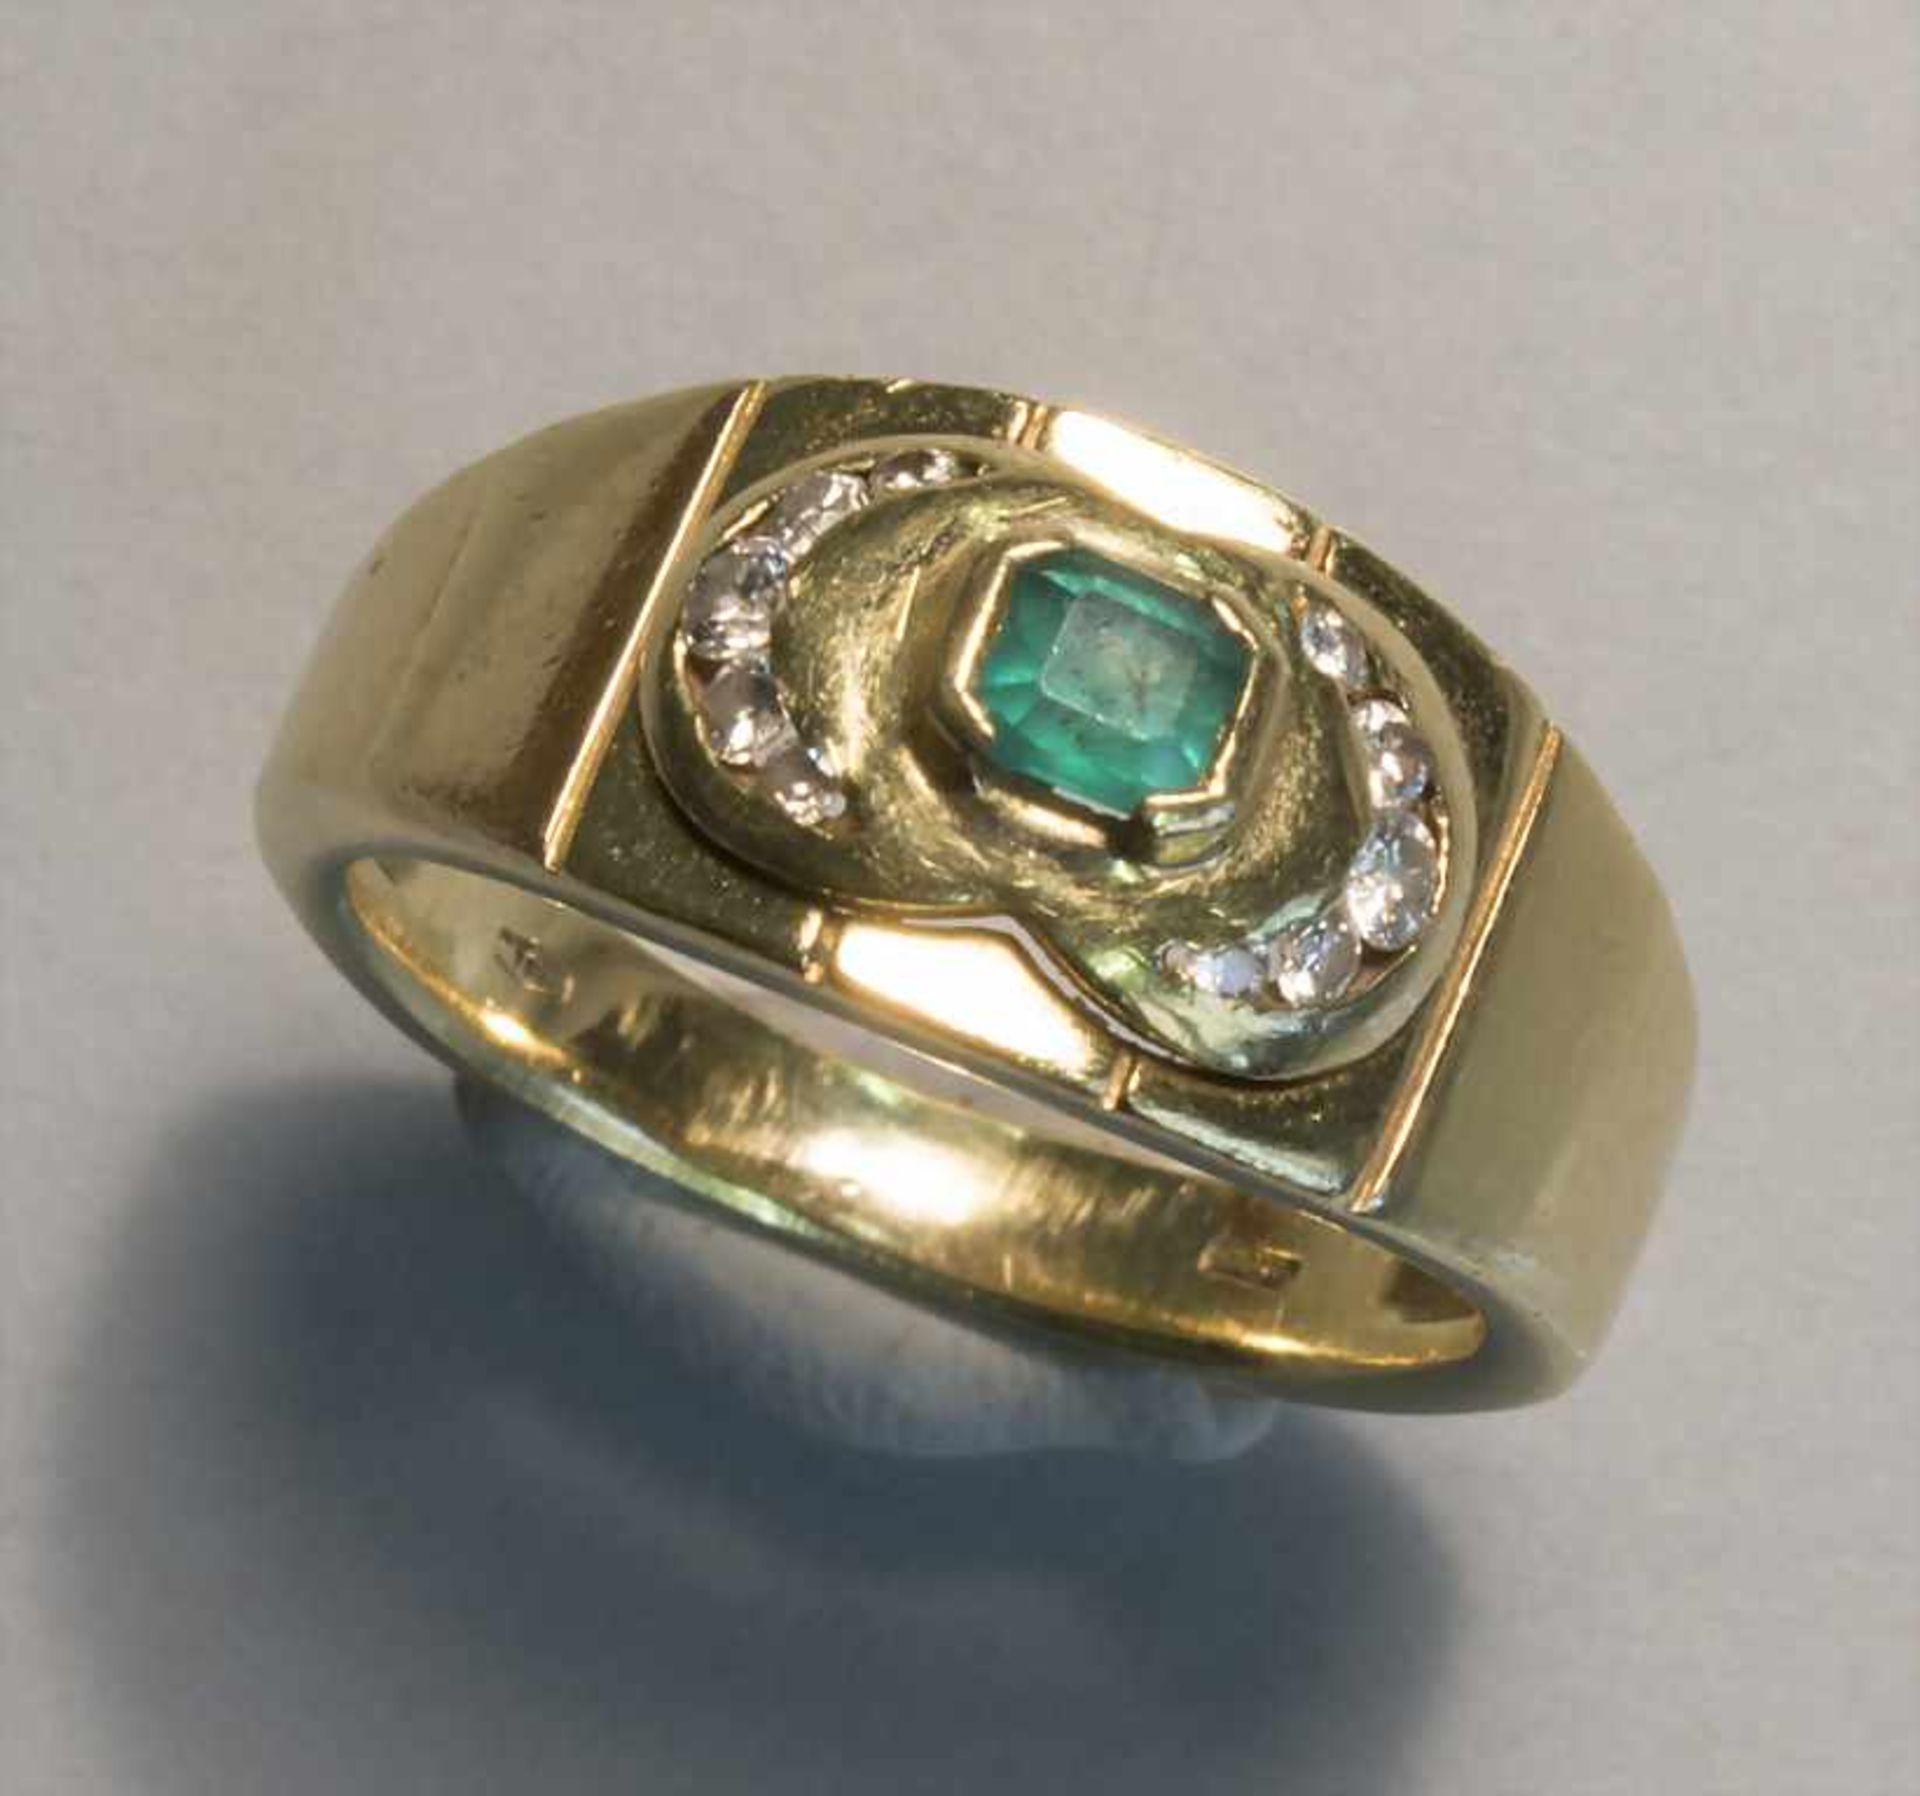 Damenring mit Smaragd und Diamanten / A ladies ring with emerald and diamonds